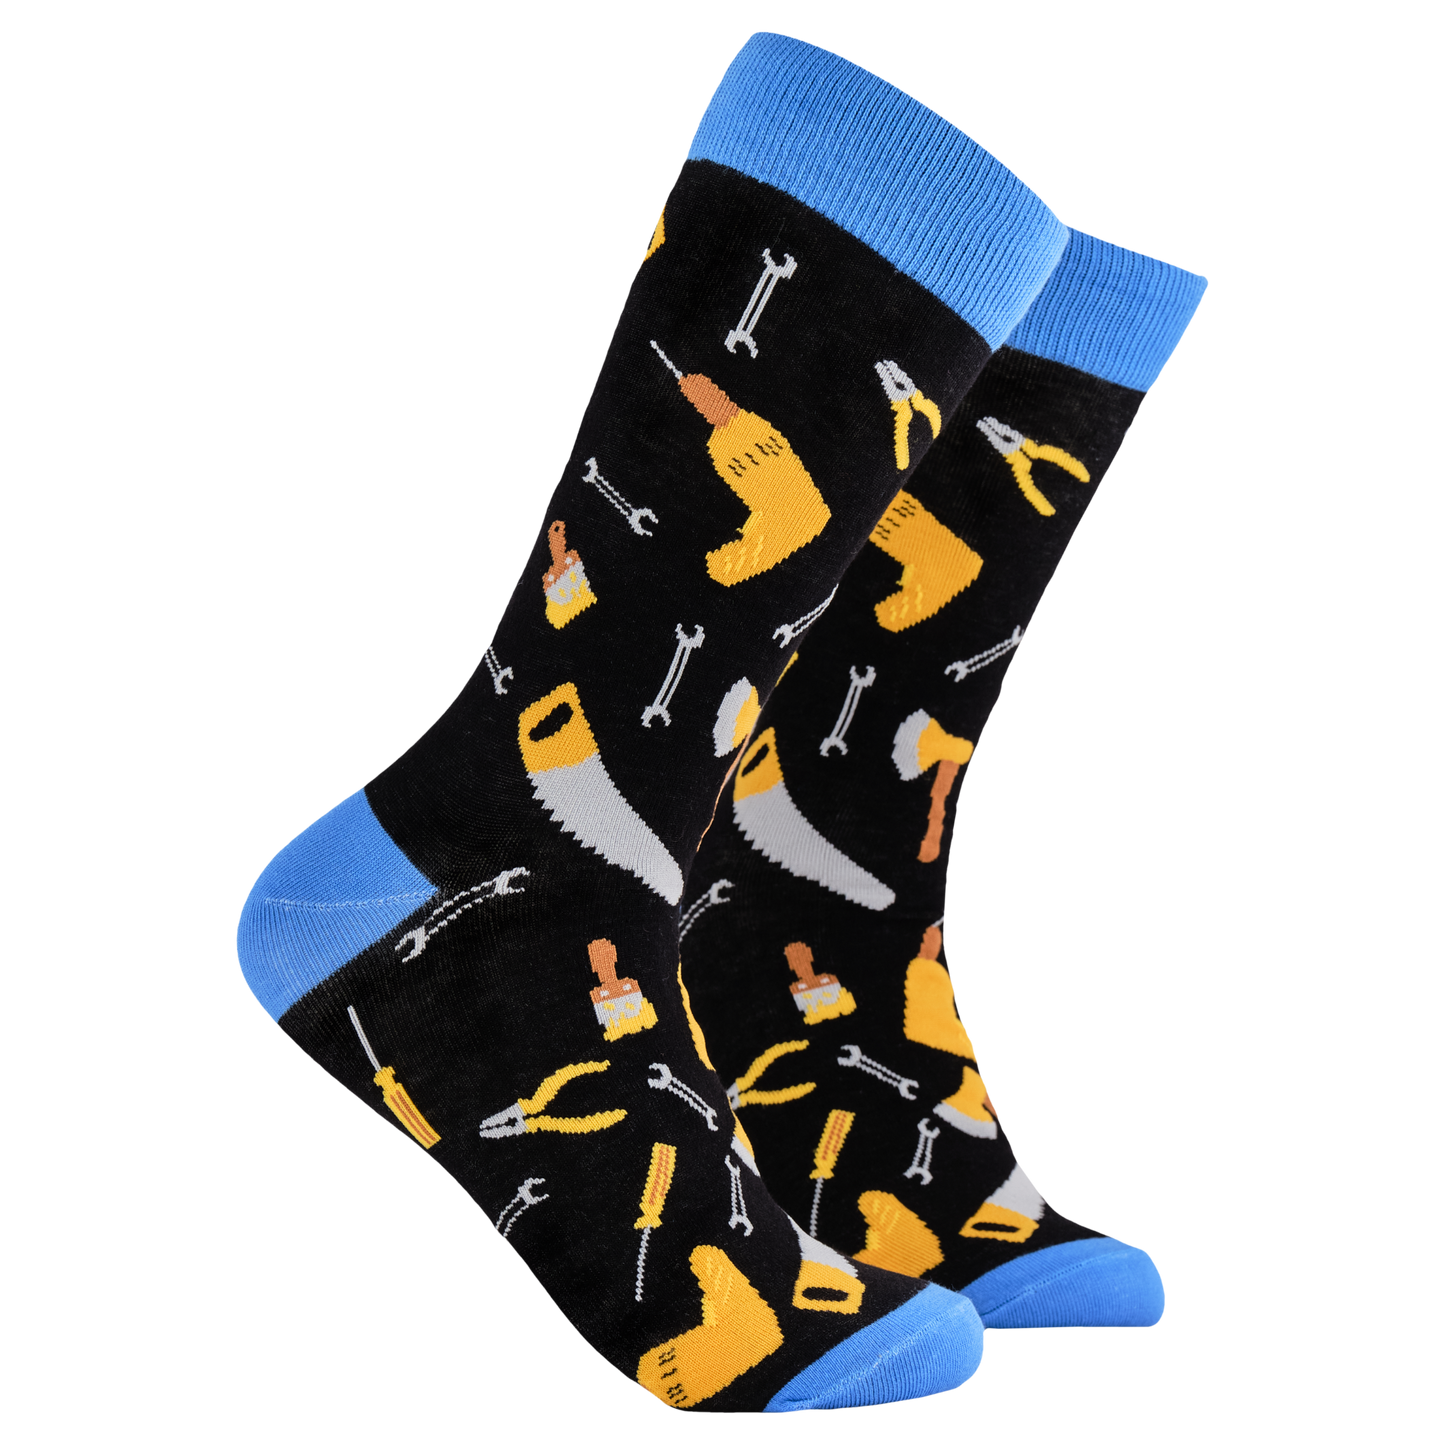 DIY Socks - Handy Andy. A pair of socks depicting DIY tools. Black legs, blue cuff, heel and toe.